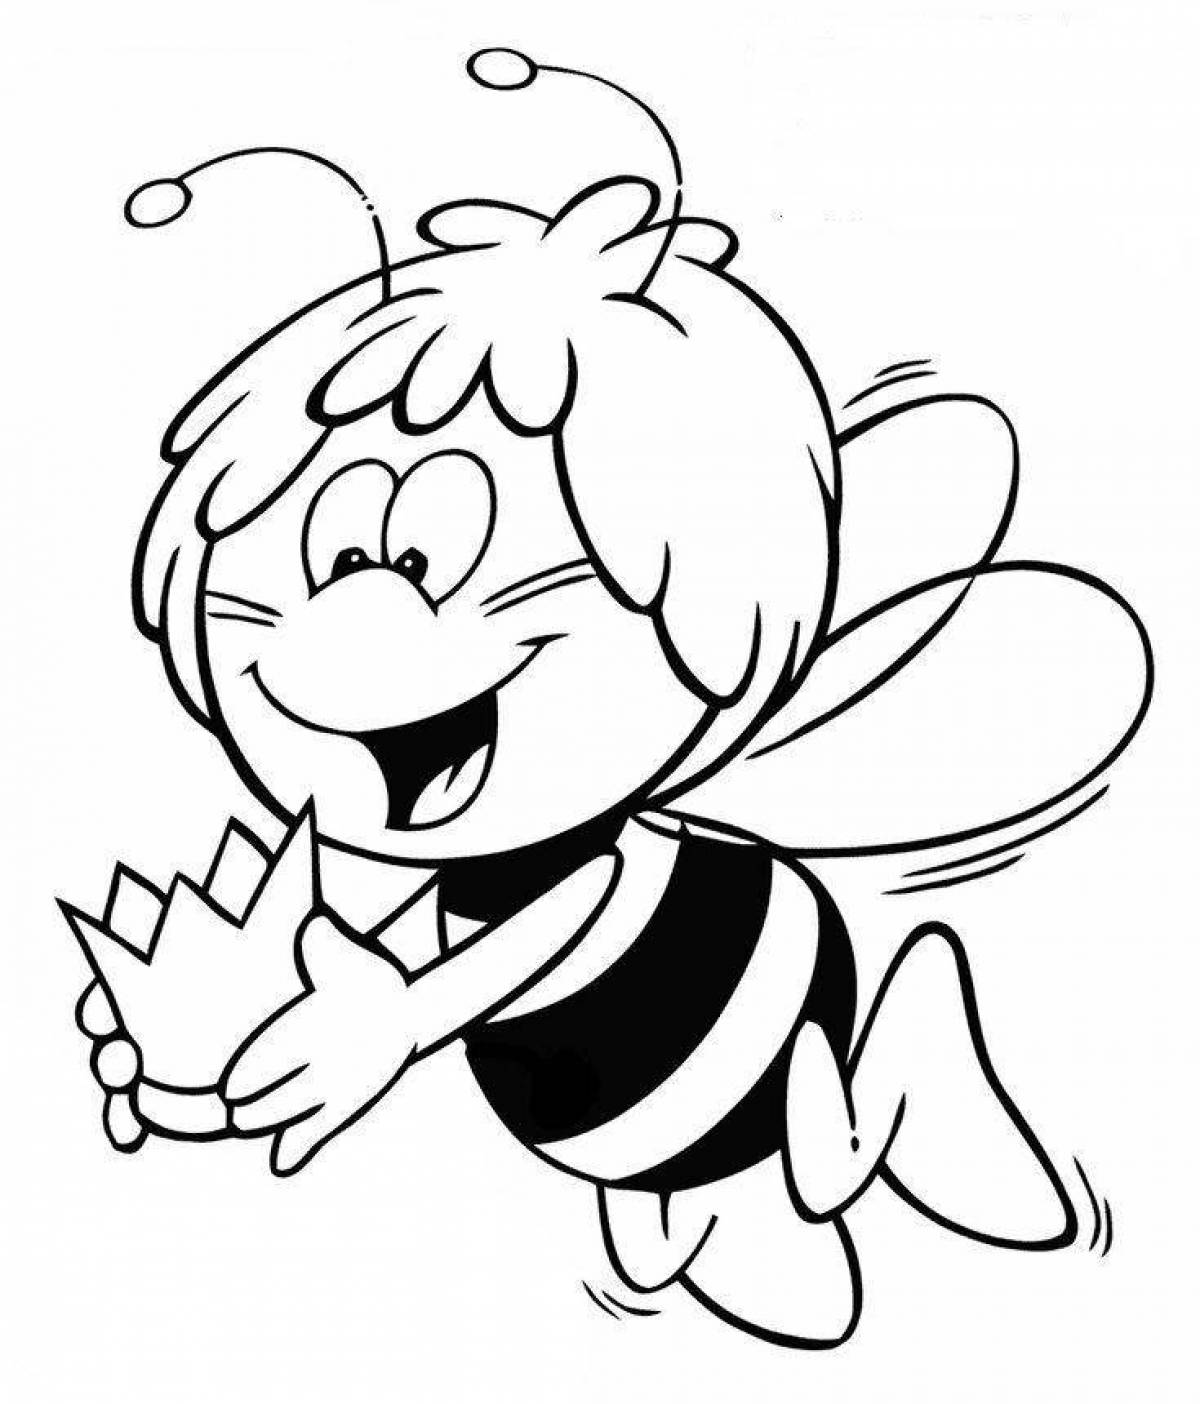 Забавная раскраска пчелы для детей